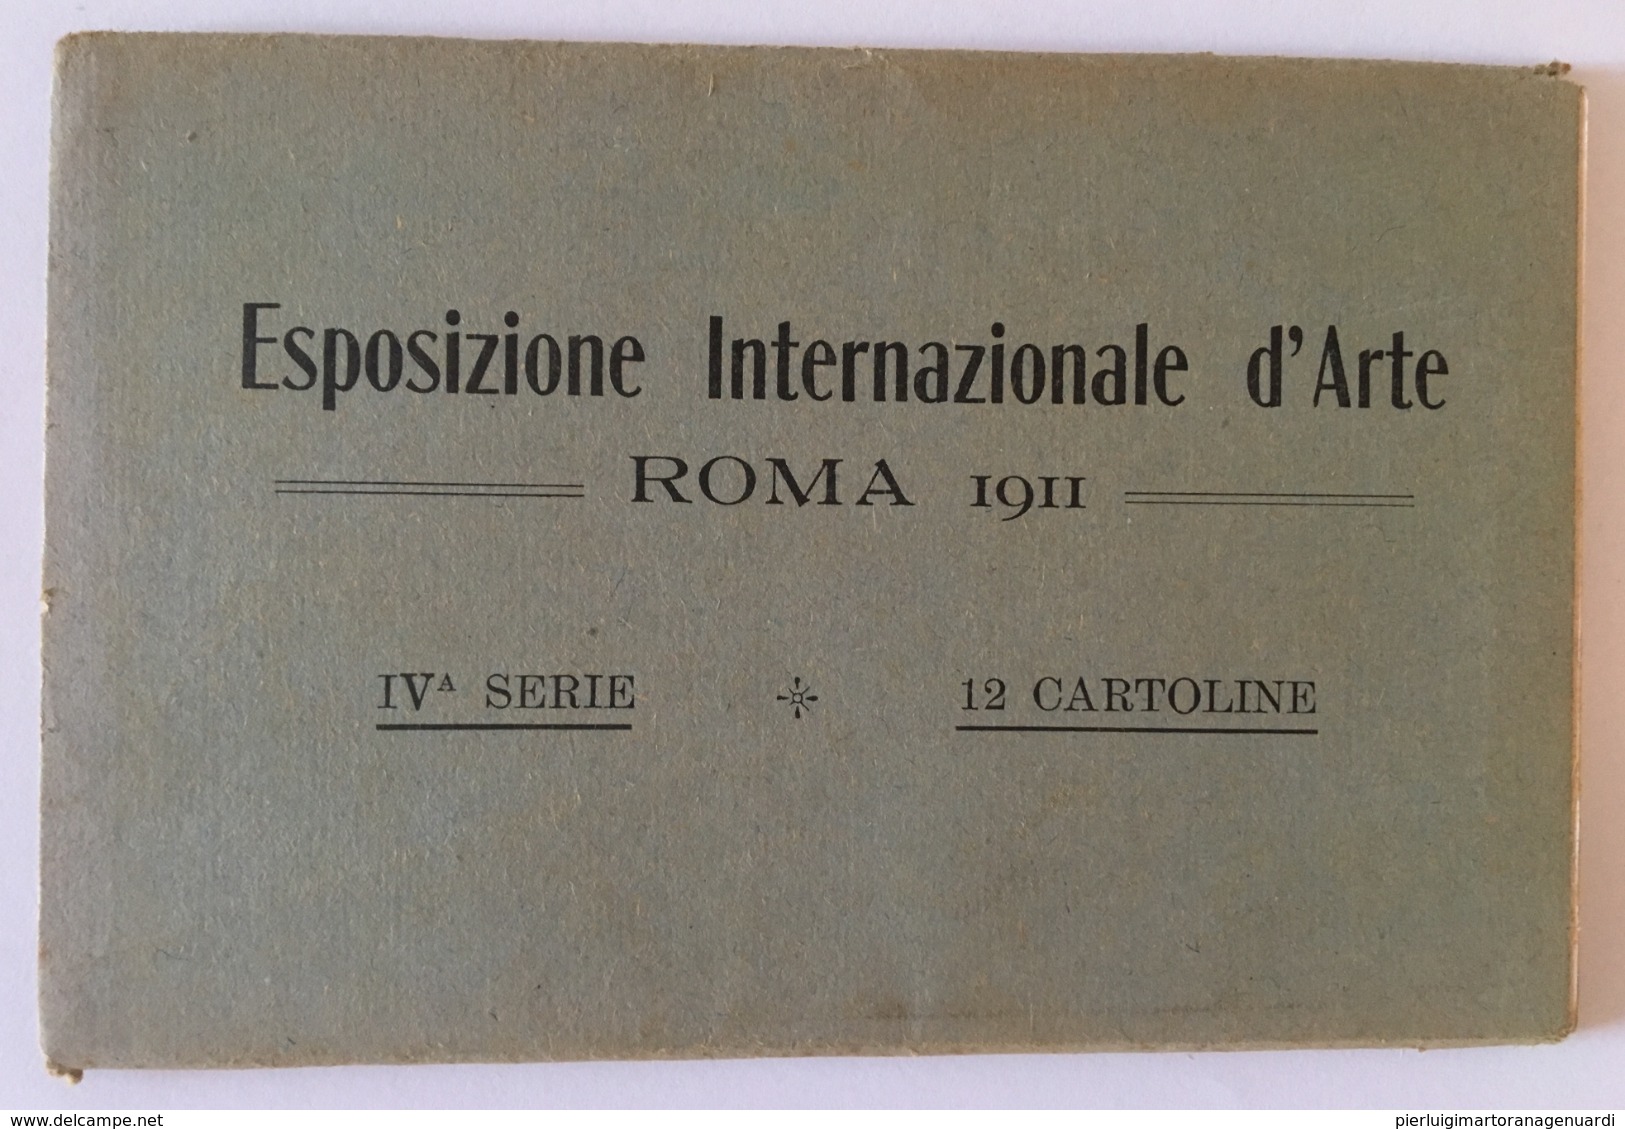 v 10008 n.12 CARTOLINE Esposizione Internazionale d'Arte - Roma 1911- IV SERIE - 12 CARTOLINE